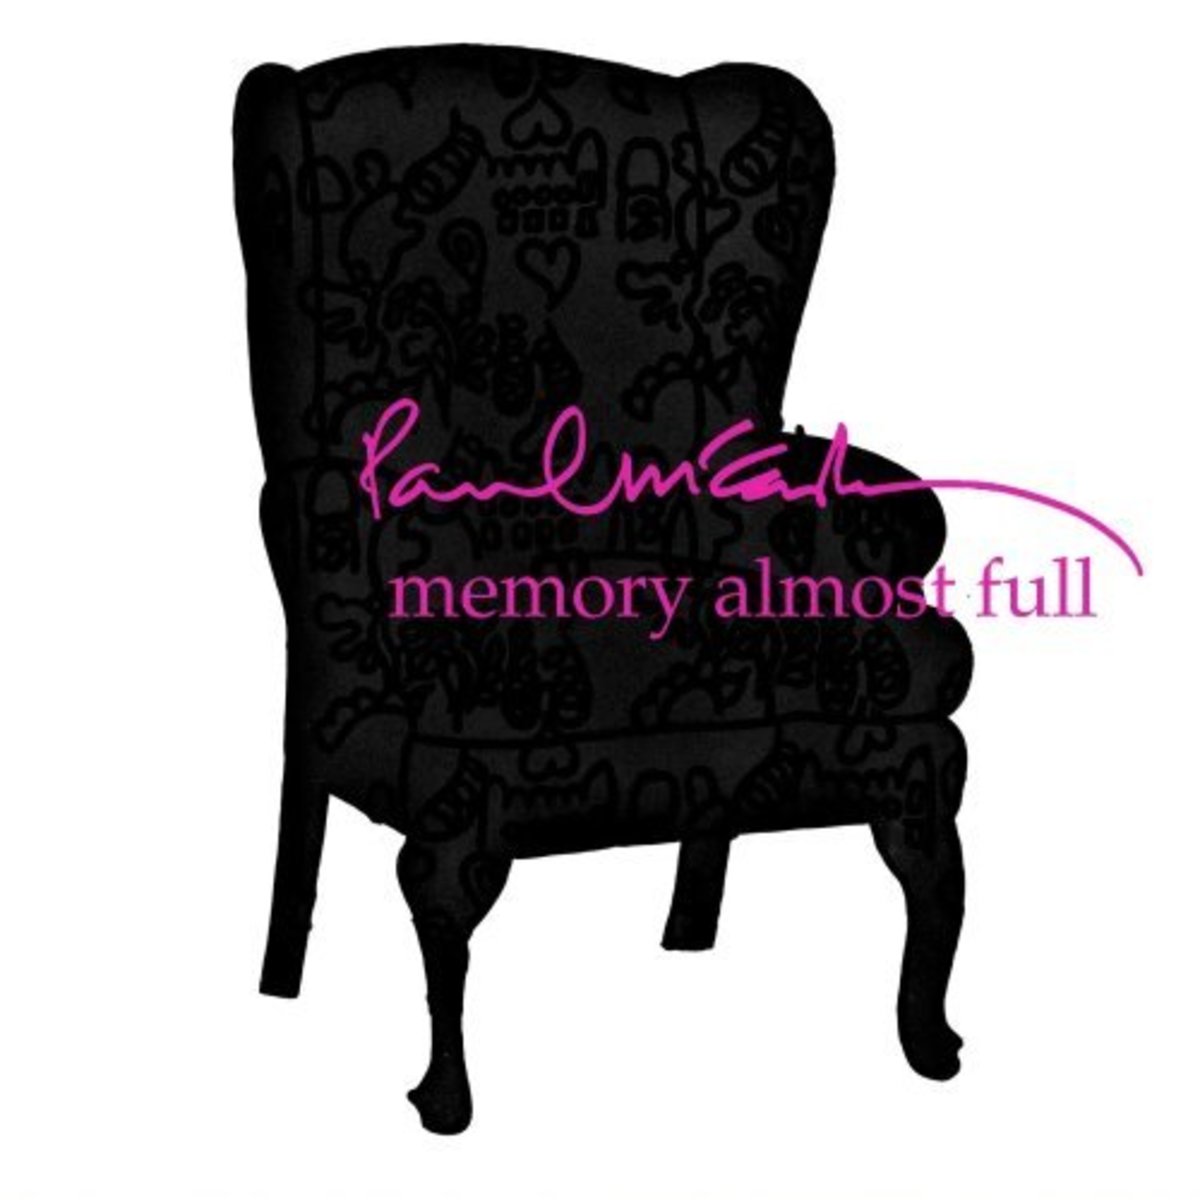 Paul McCartney's Memory Almost Full